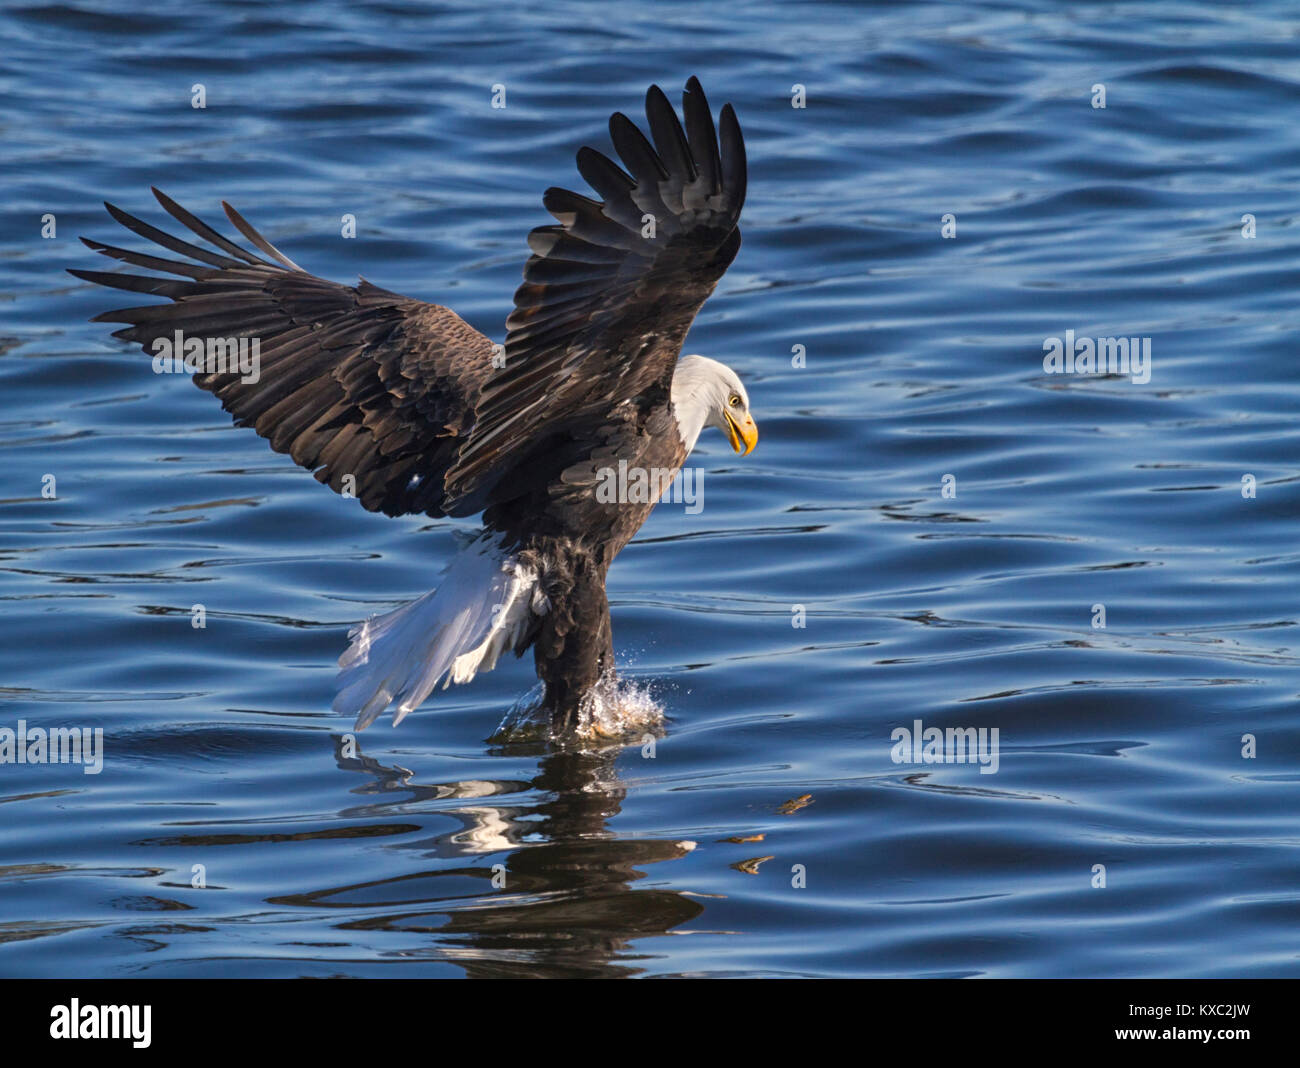 American Bald Eagle In Flight Stock Photo